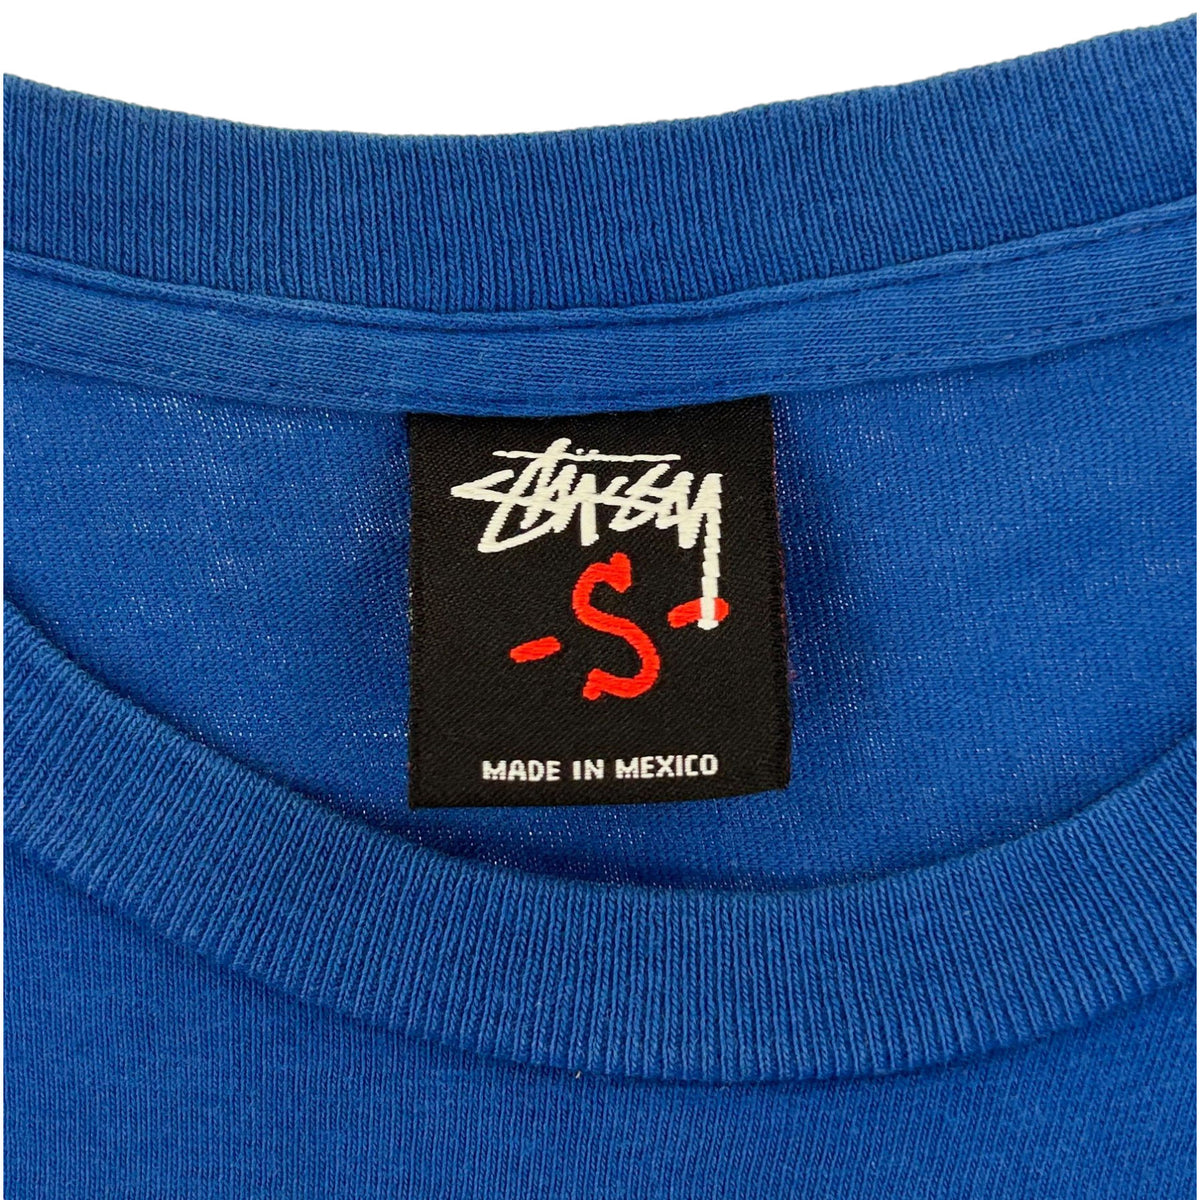 Vintage Stussy ArtT-Shirt Size S